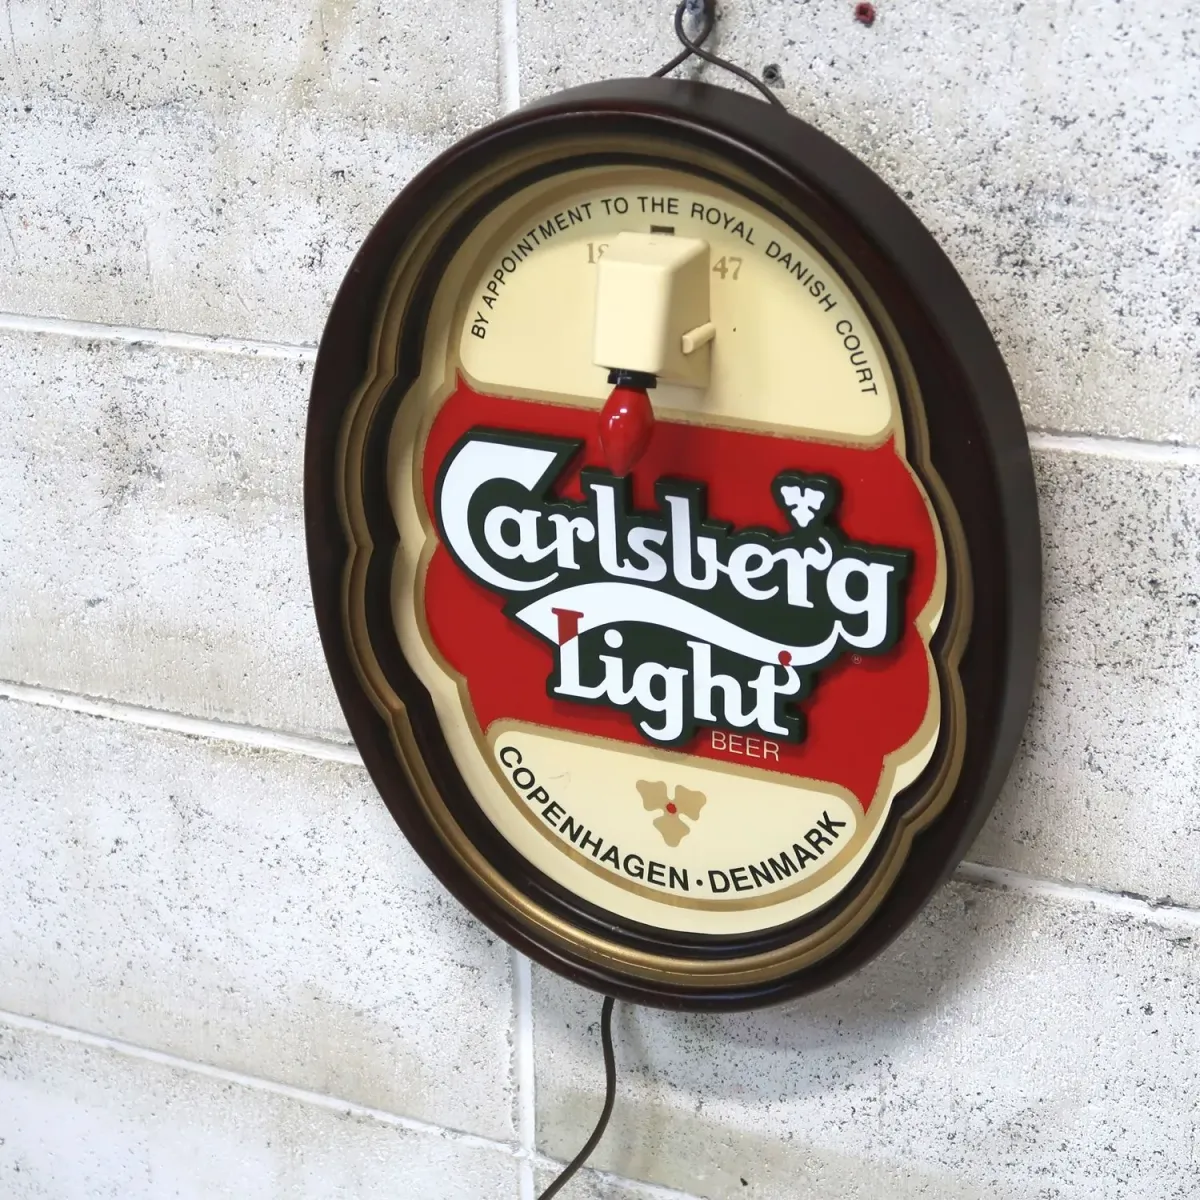 Carlsberg Light ビンテージ ライトサイン